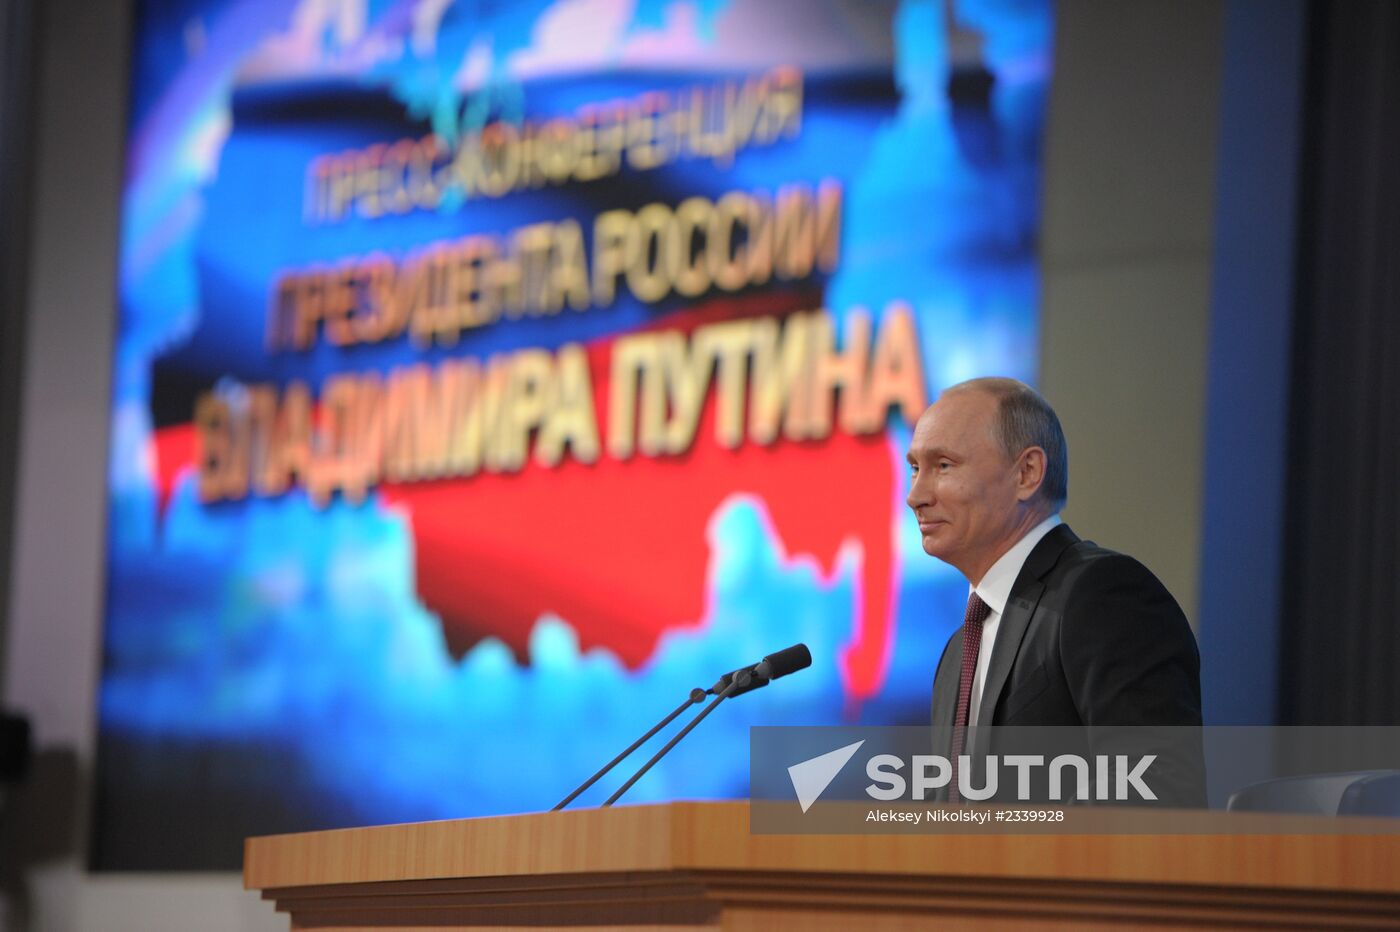 Q&A session by President Vladimir Putin